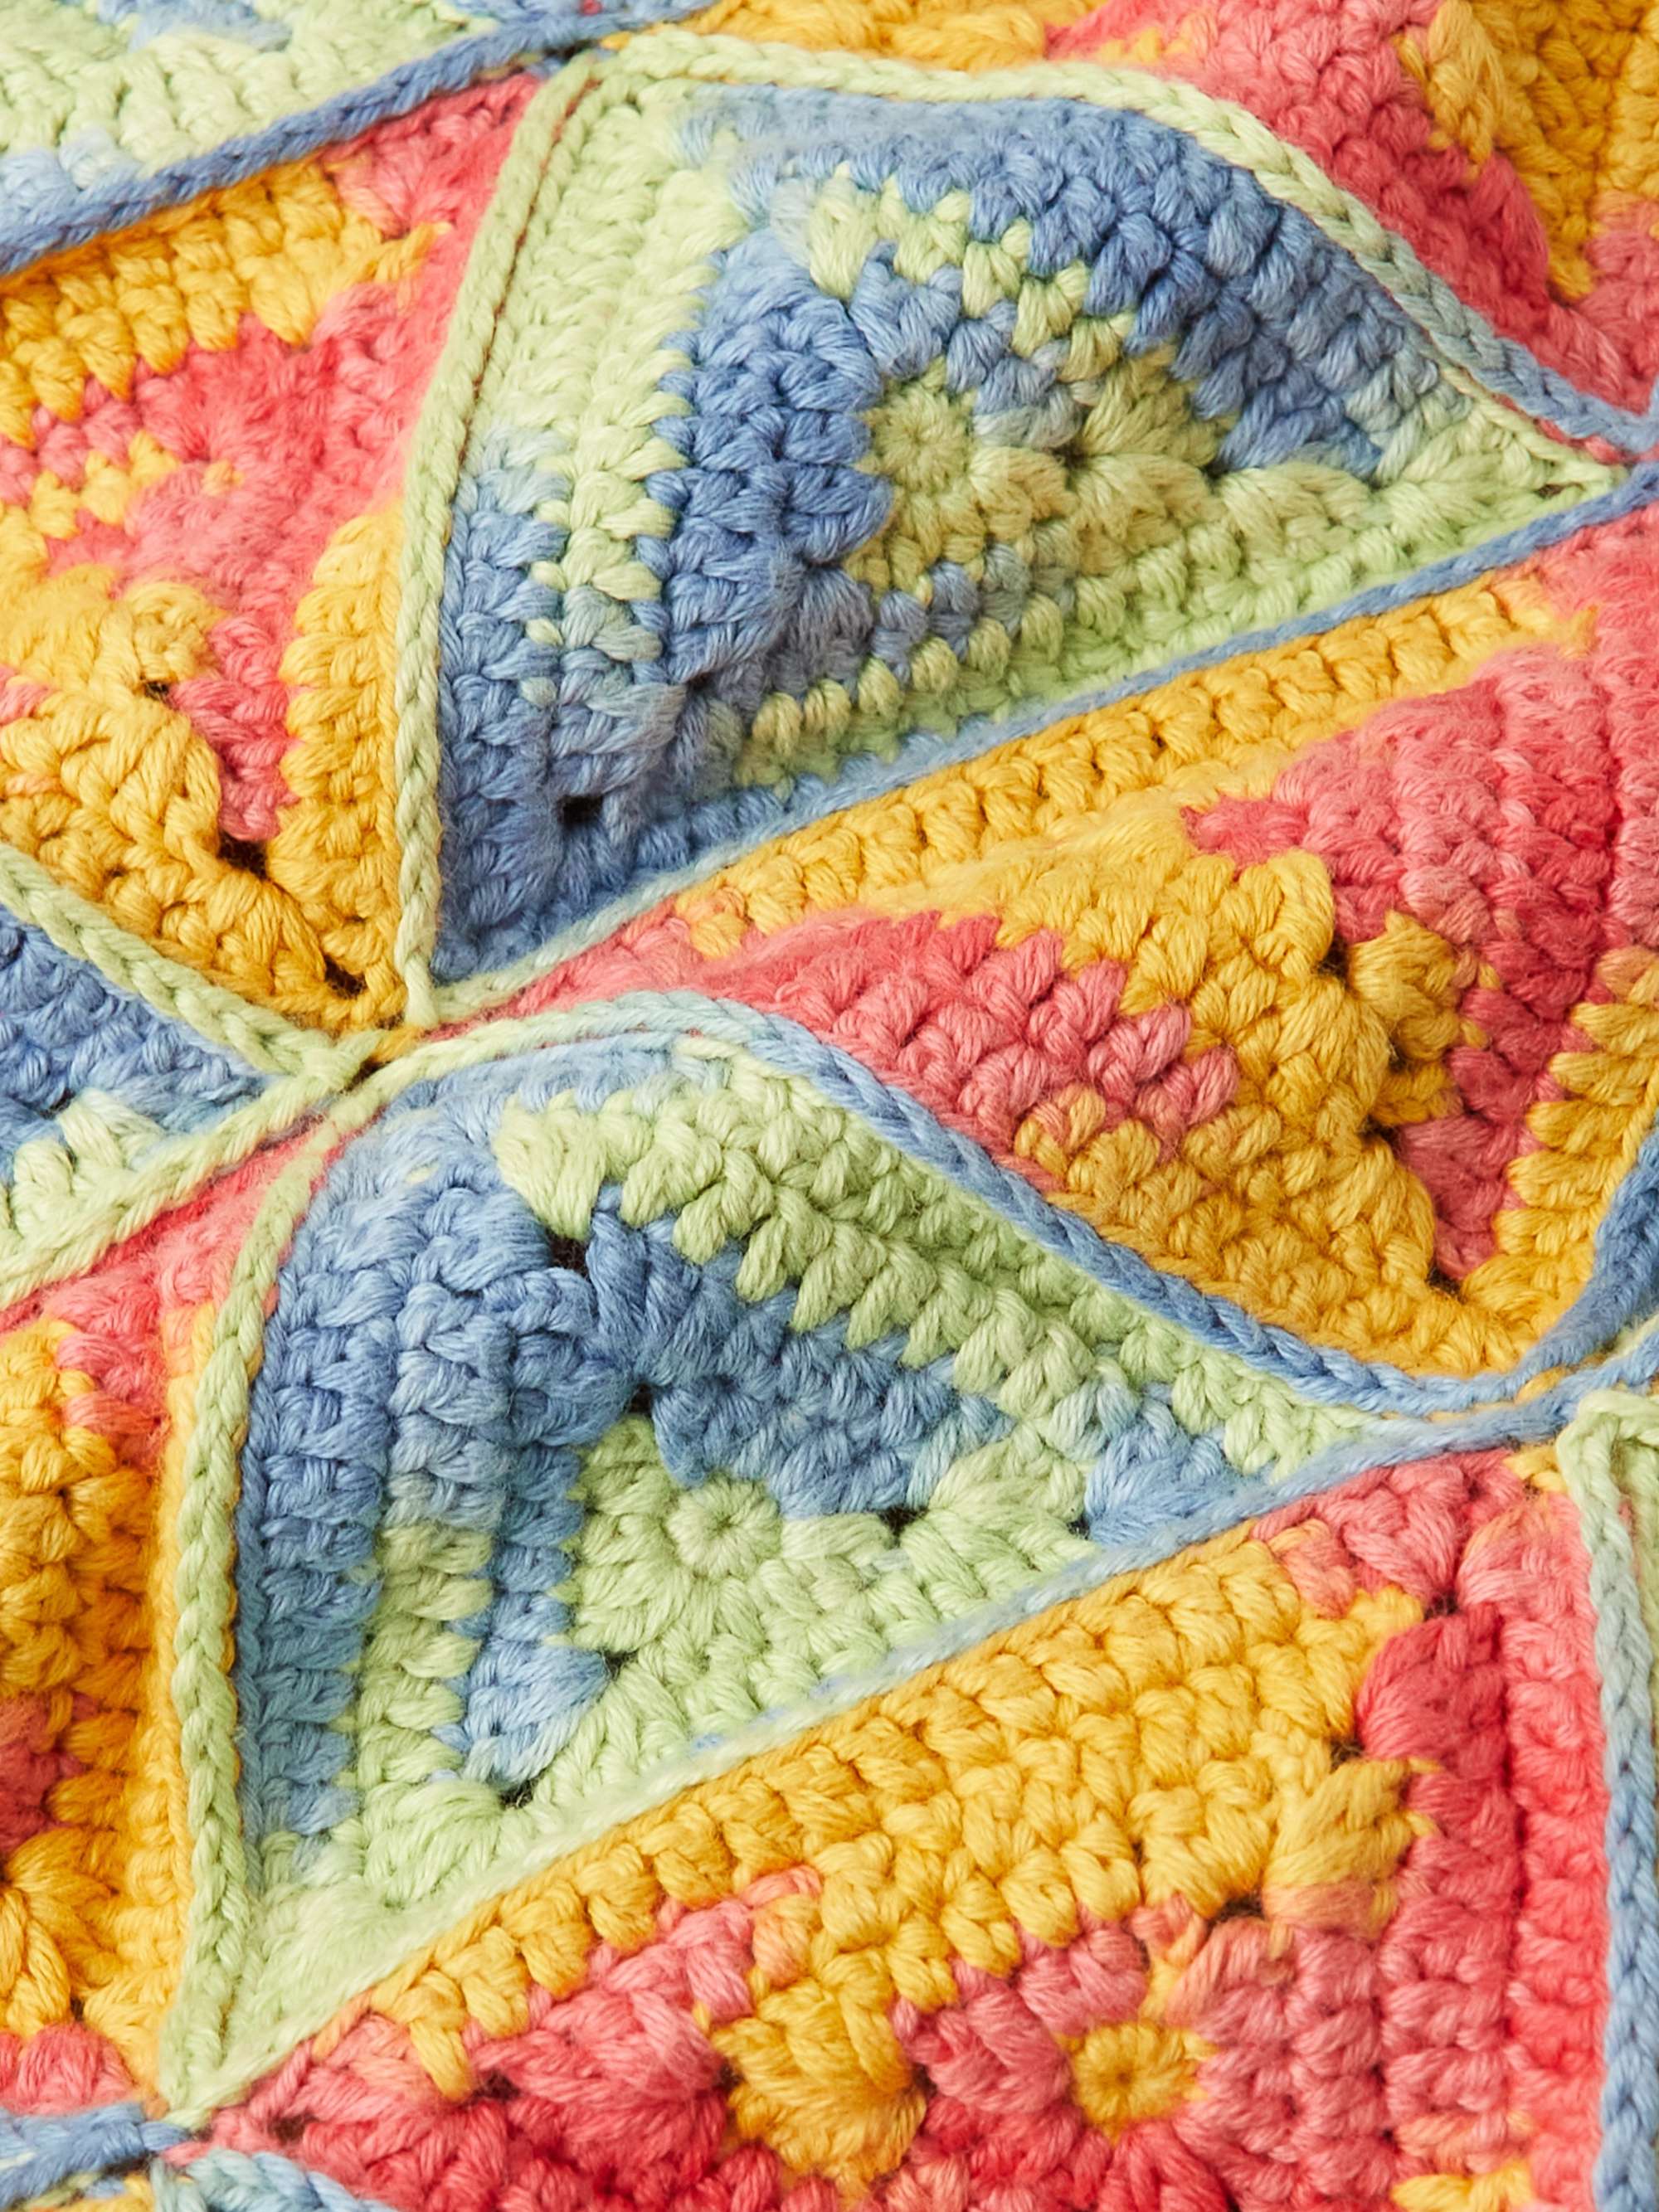 THE ELDER STATESMAN Solar Crocheted Cotton Sweater